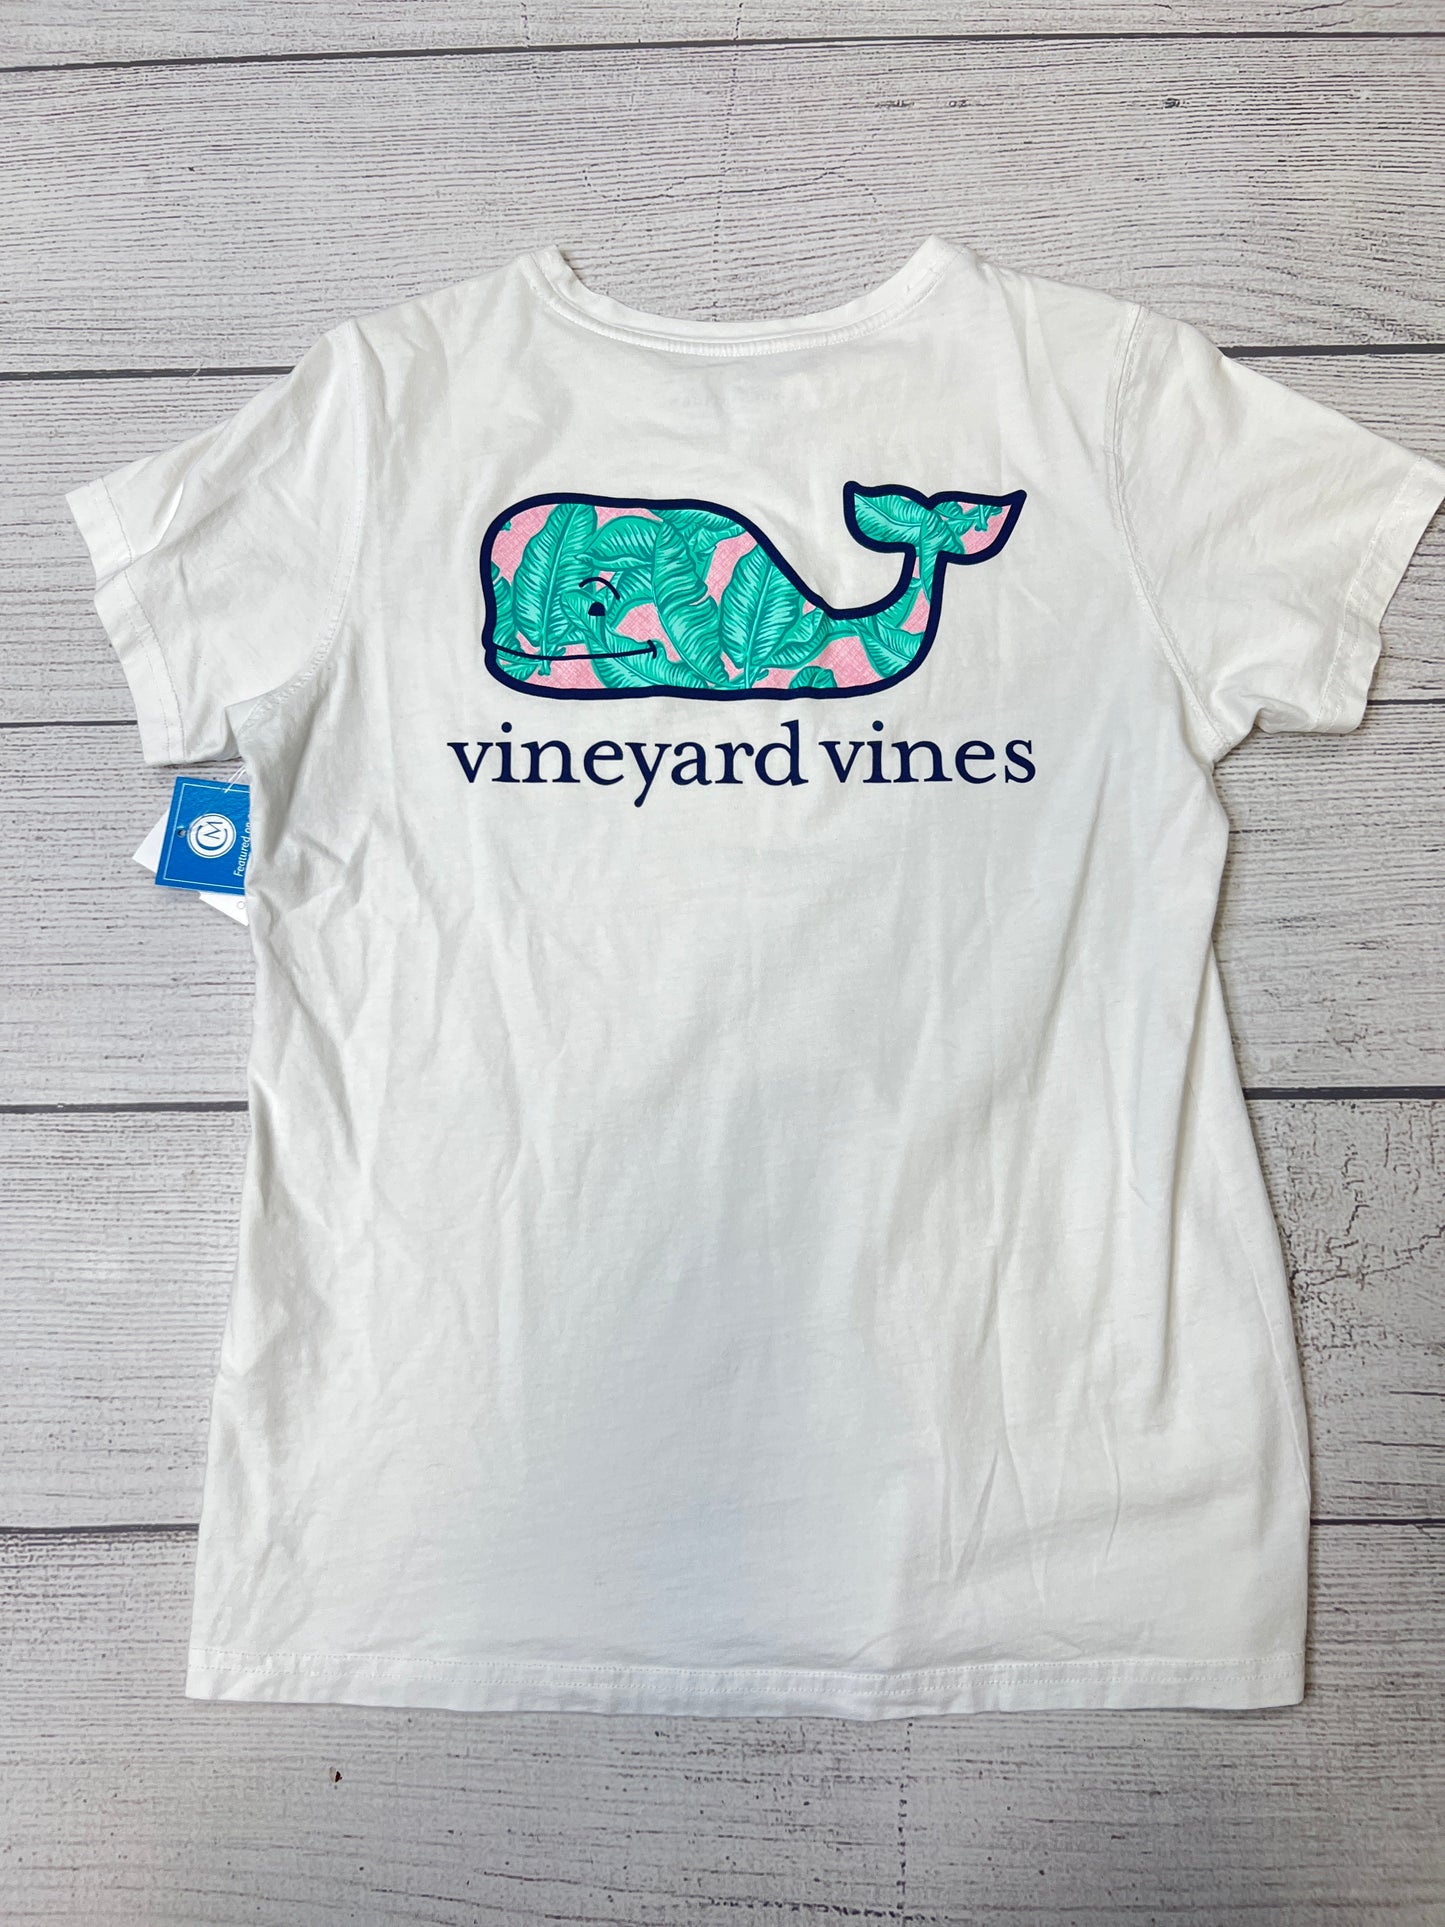 White Top Short Sleeve Vineyard Vines, Size S